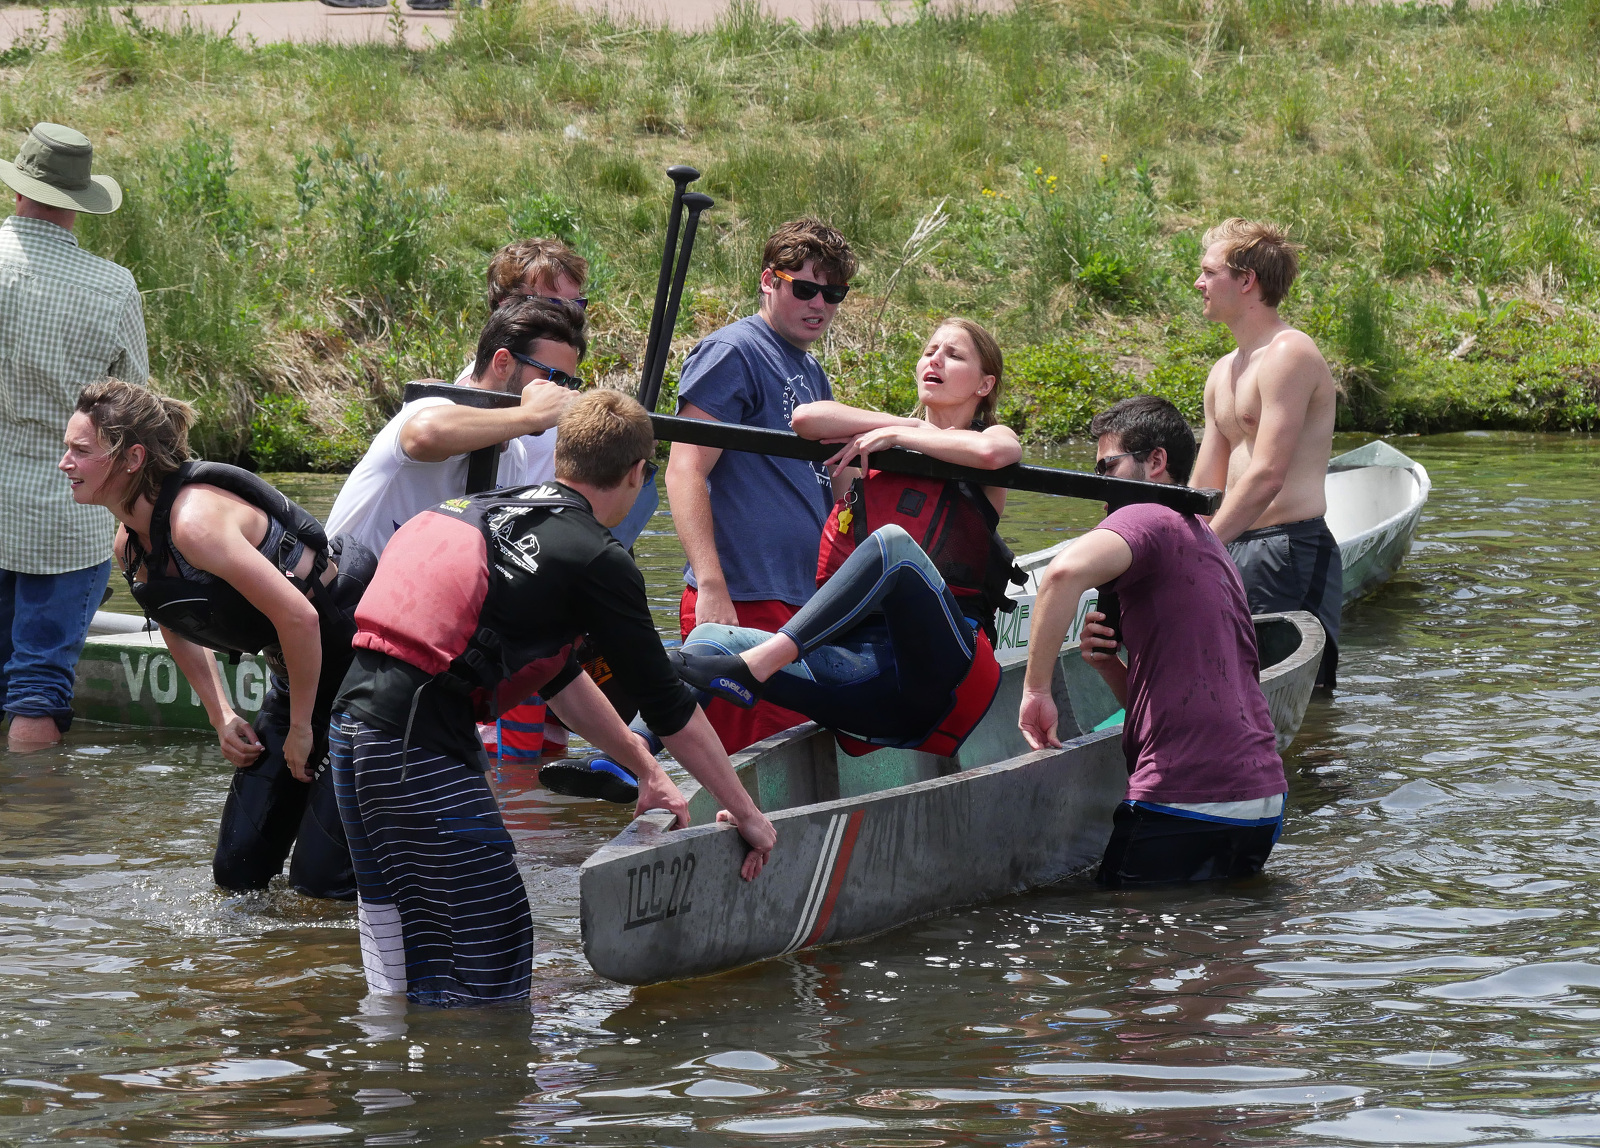 Concrete Canoe participant gets help exiting a boat.